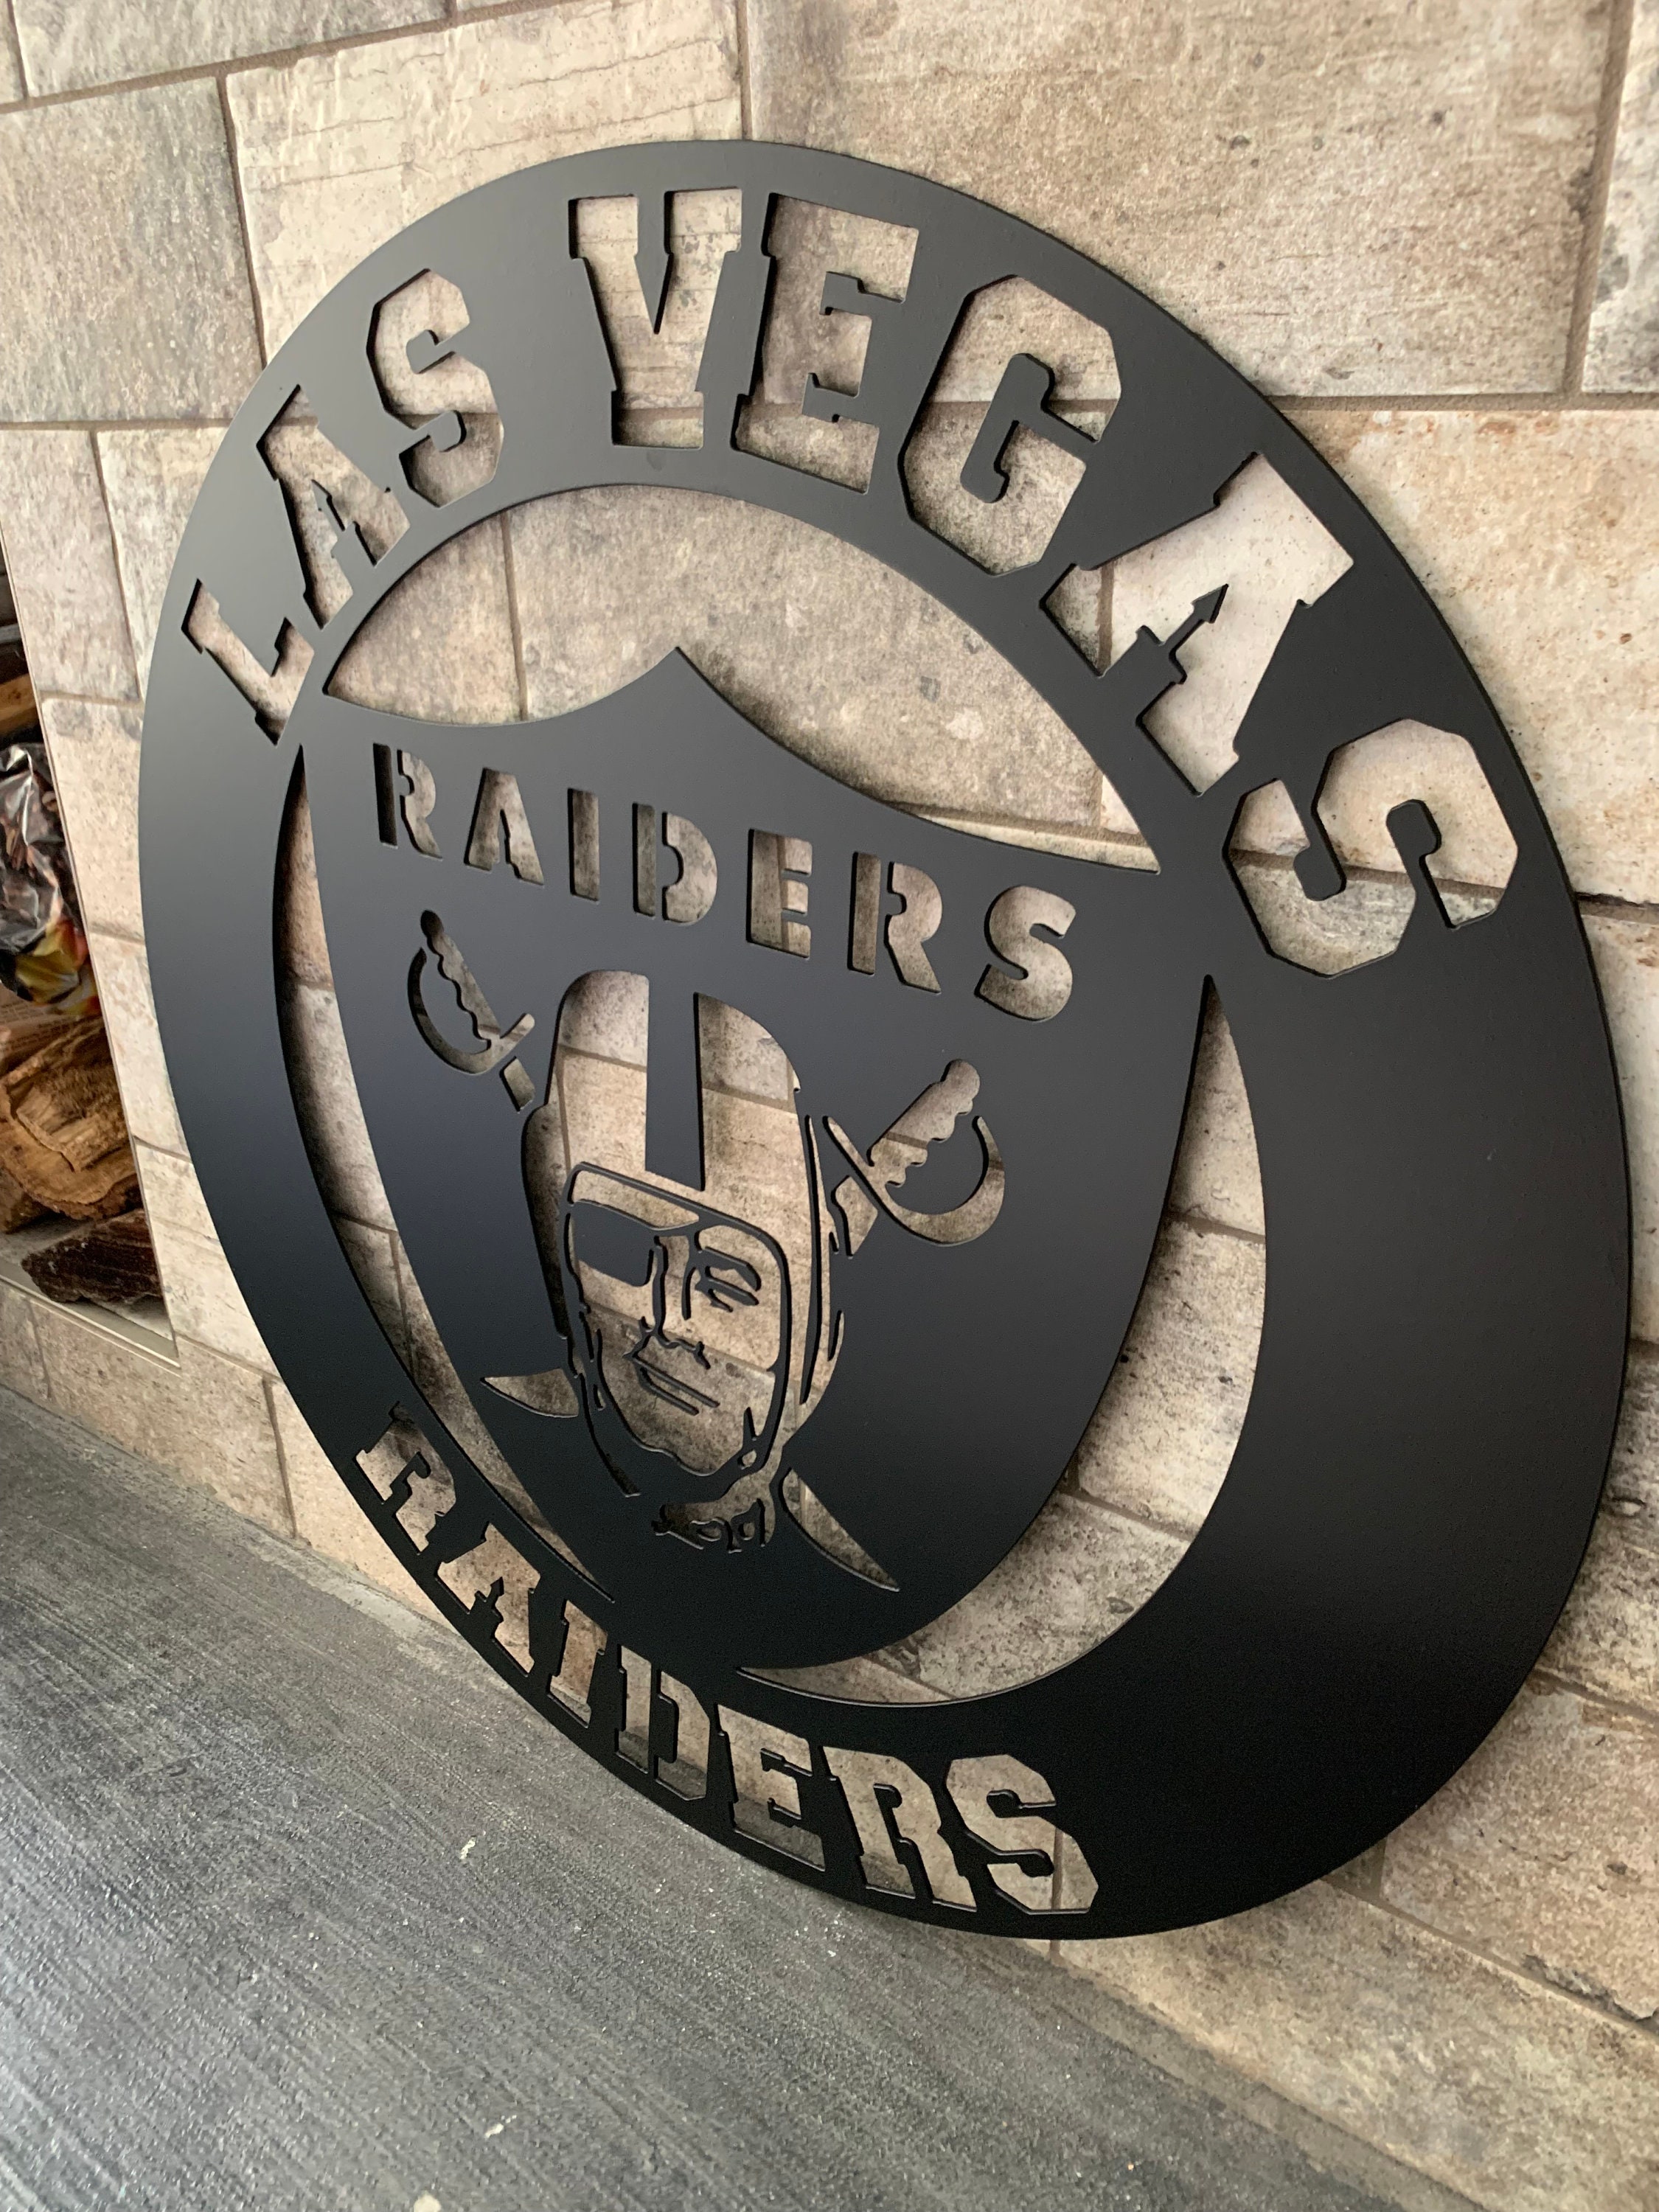 Las Vegas Raiders NFL Metal Tacker Wall Sign